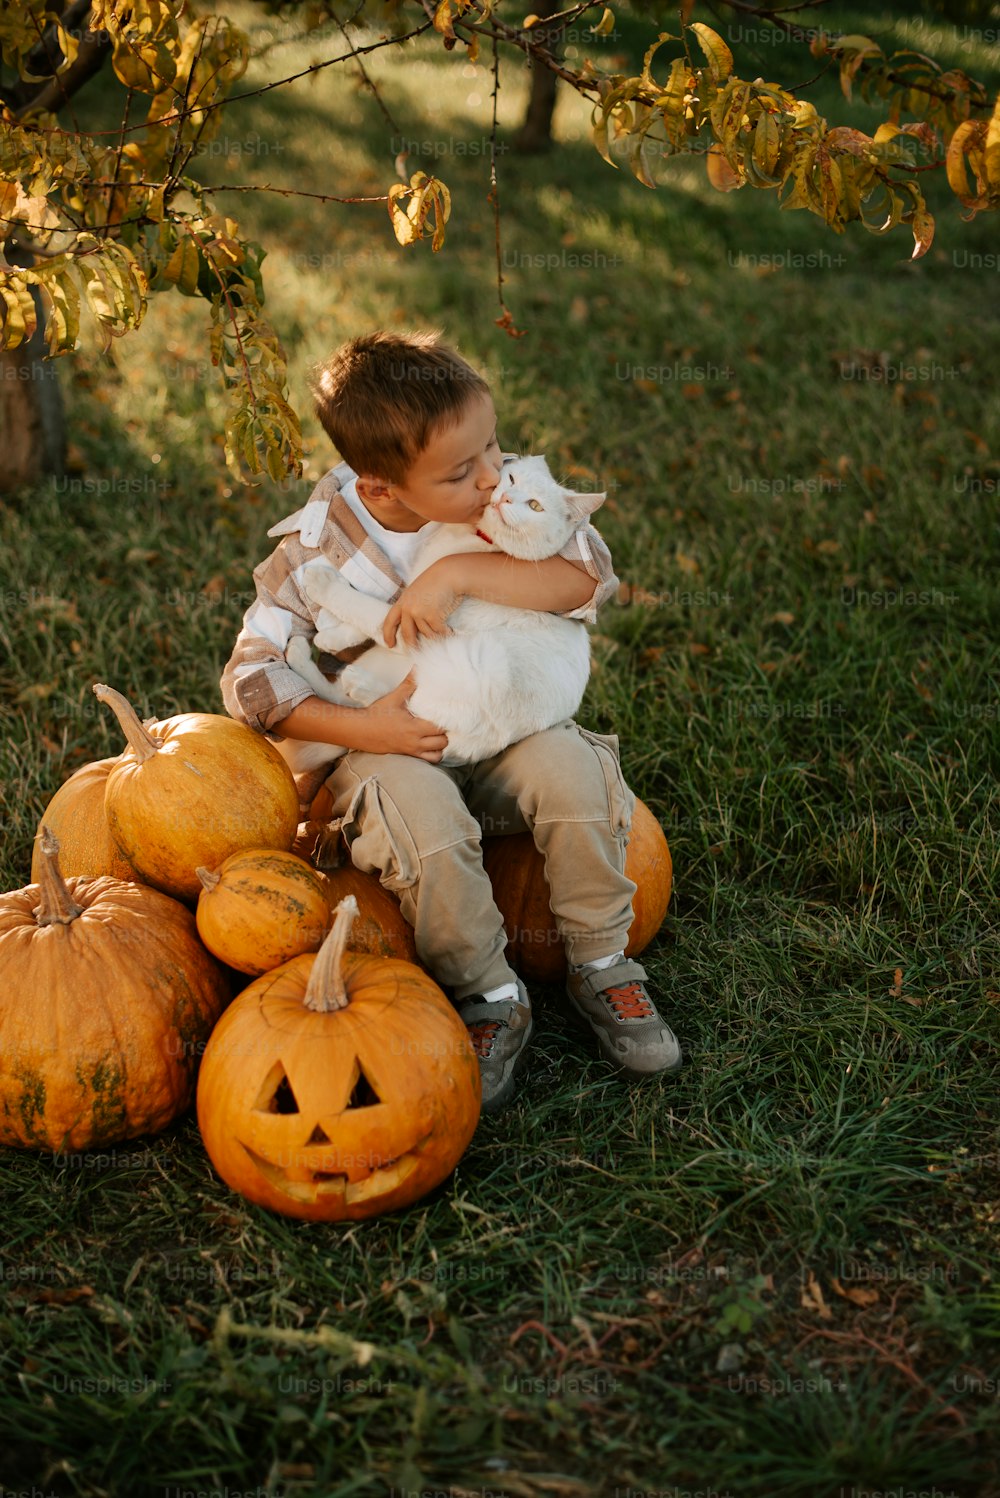 a little boy sitting on a pile of pumpkins